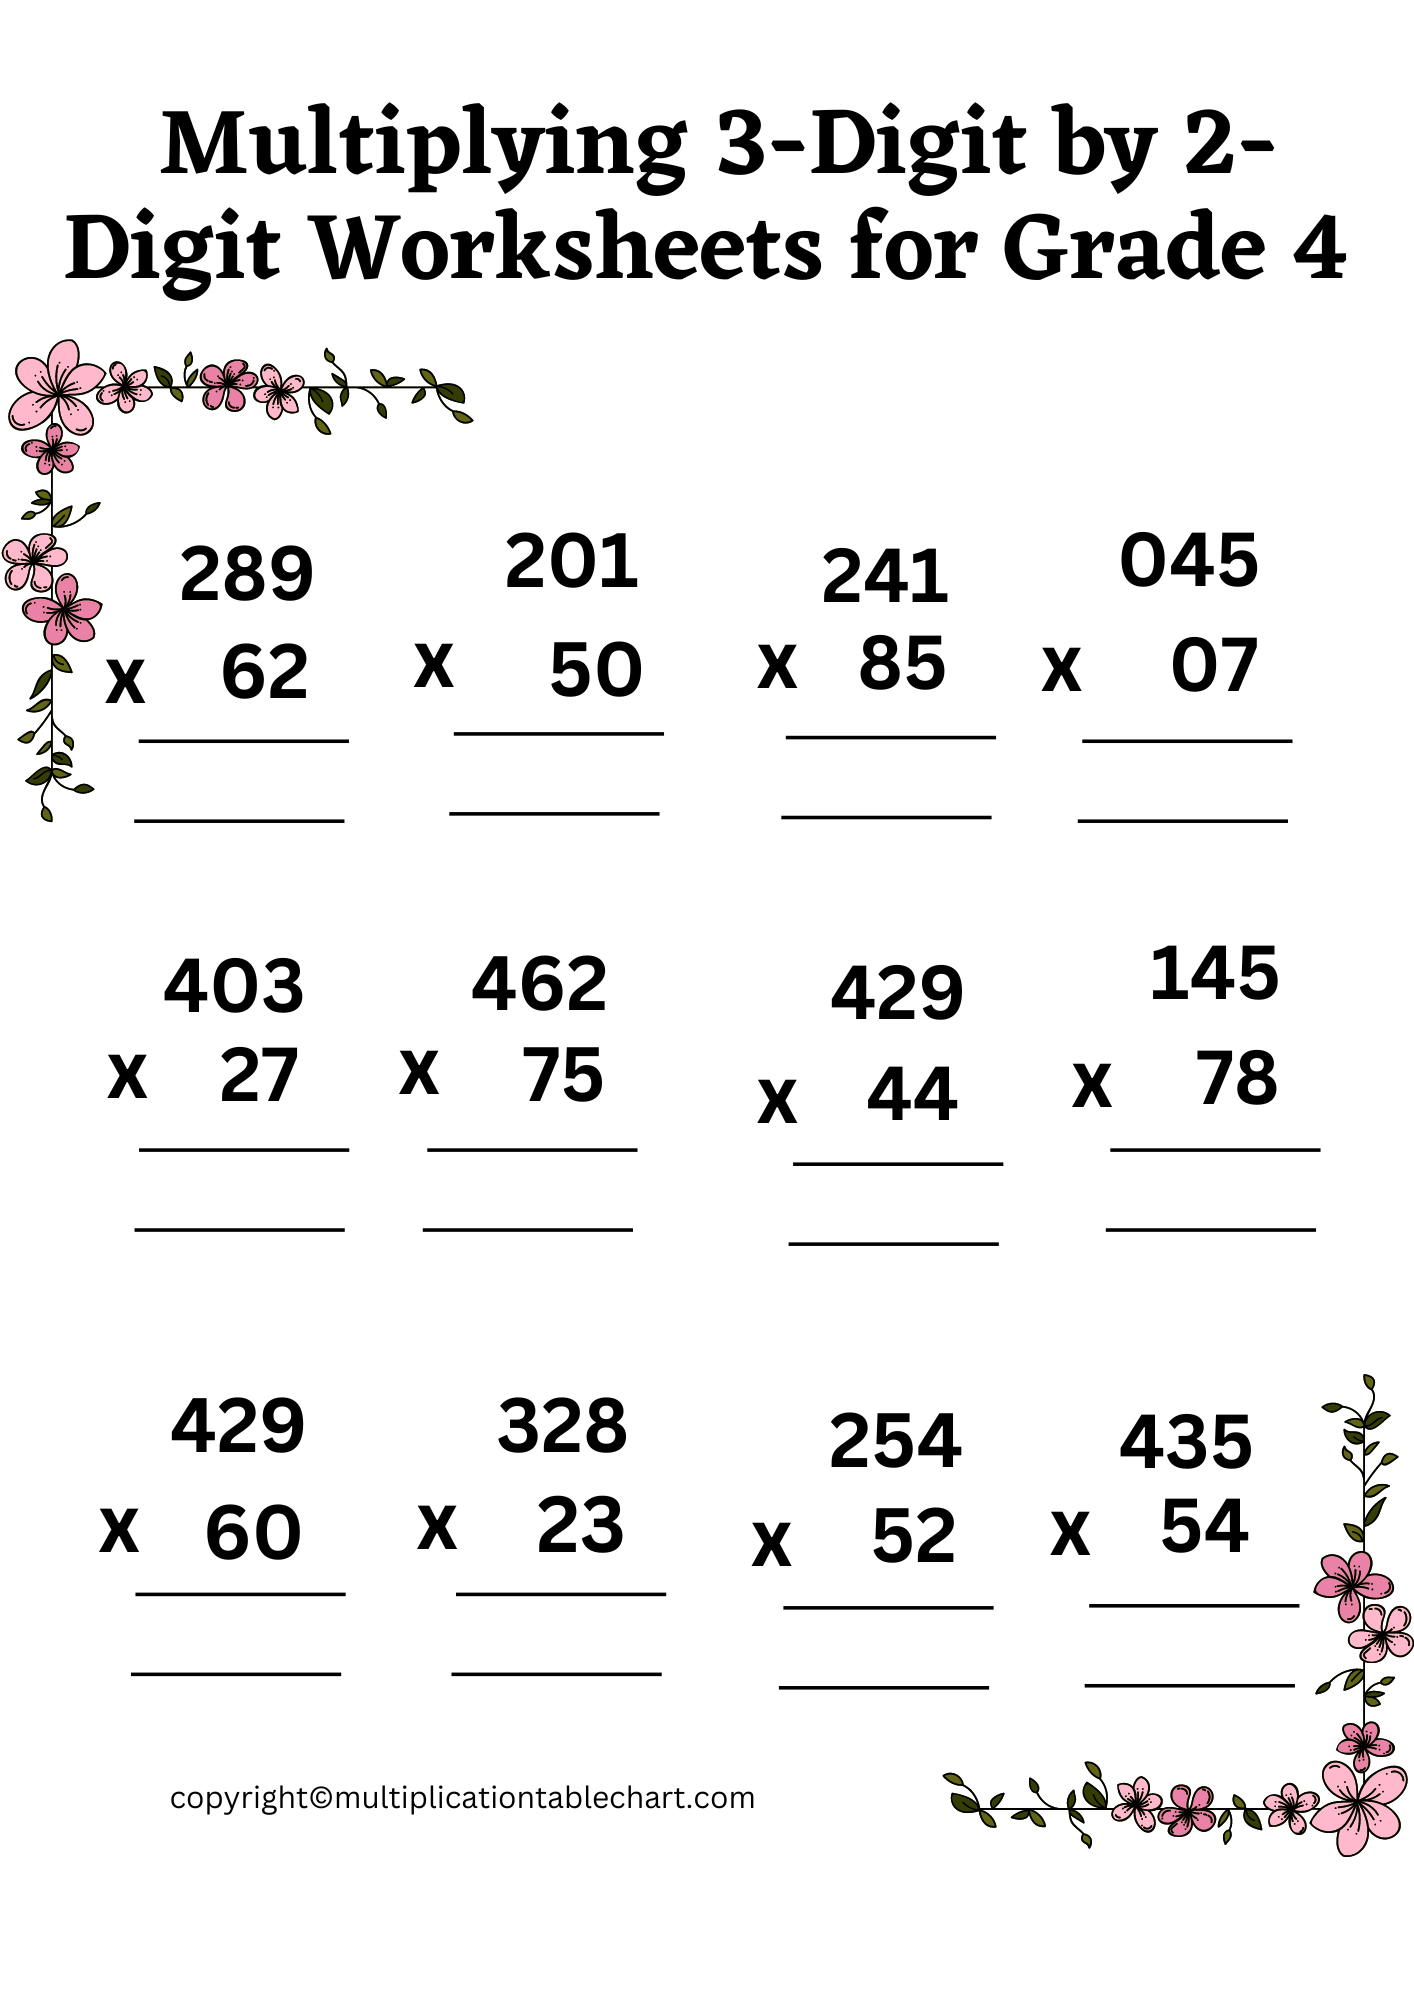 multiplying-3-digit-by-2-digit-worksheets-grade-4-multiplication-table